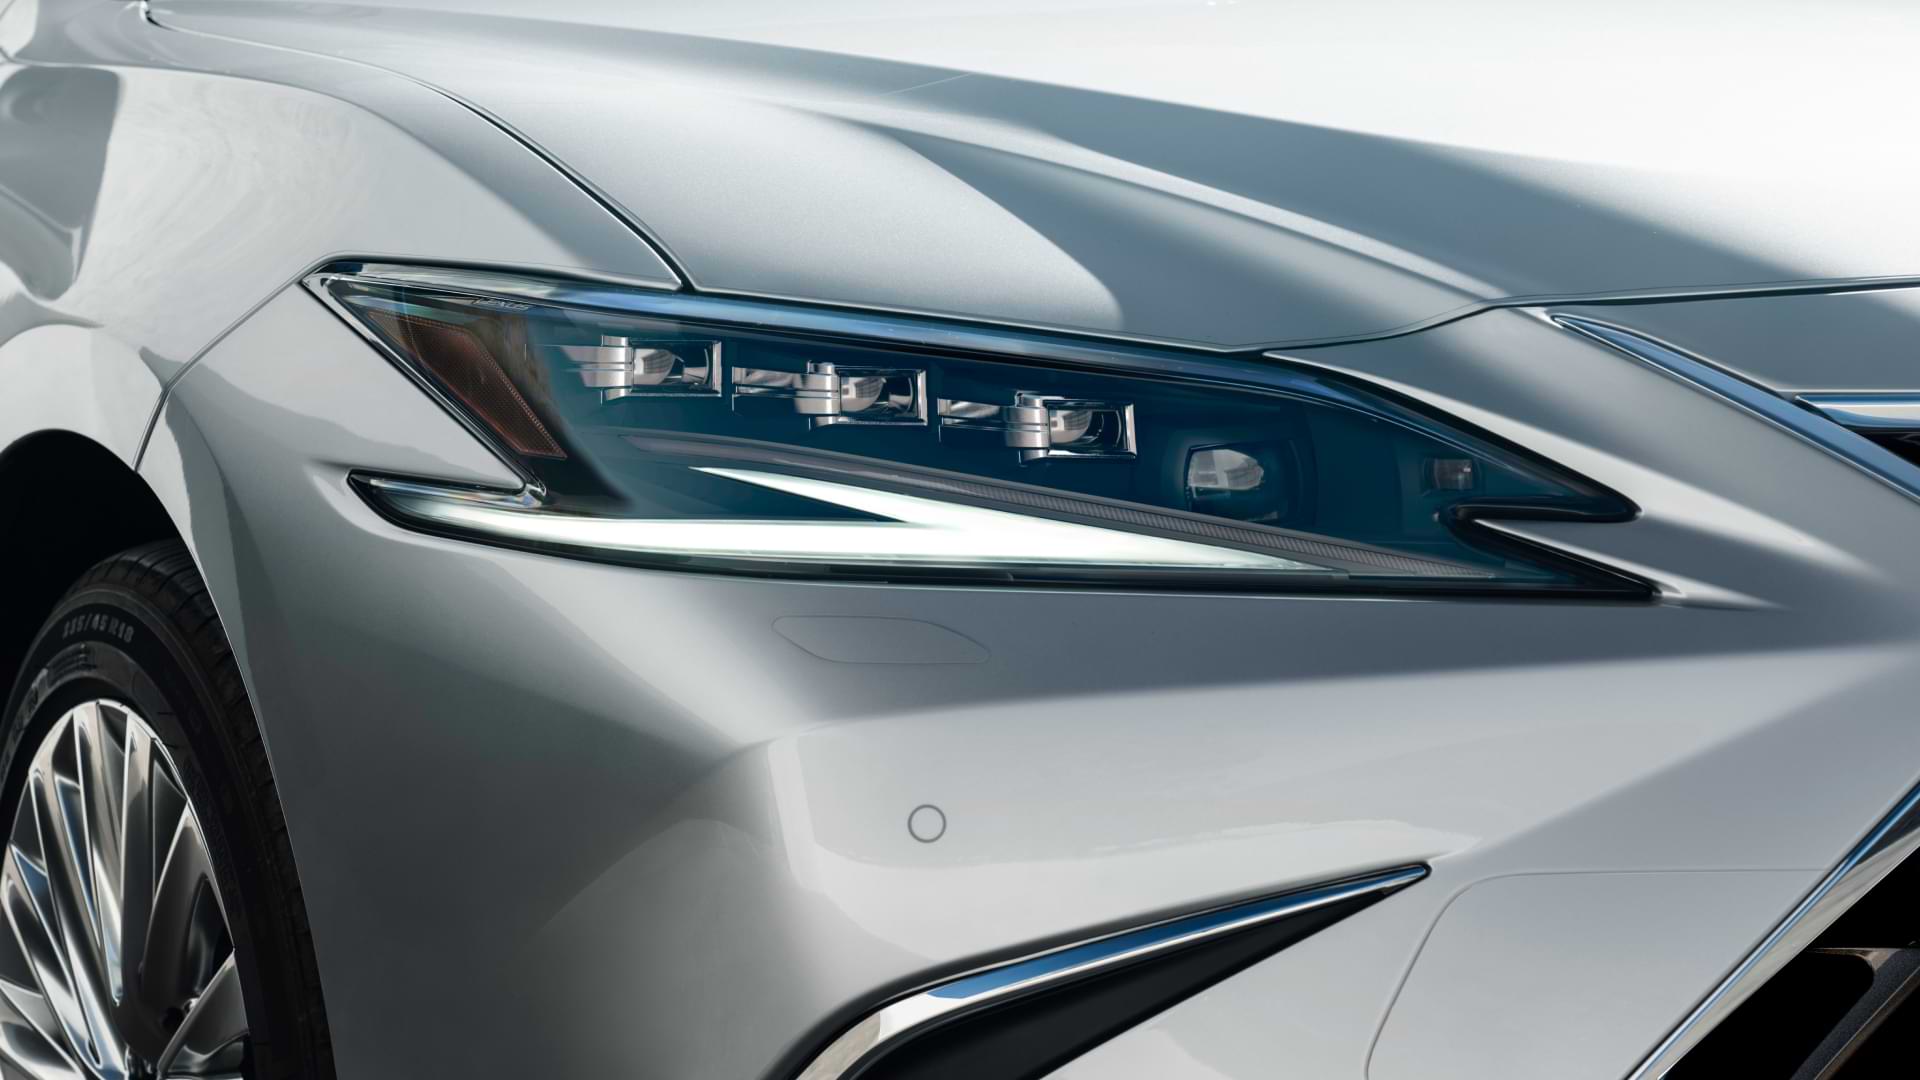 Front headlight of a silver 2021 Lexus ES